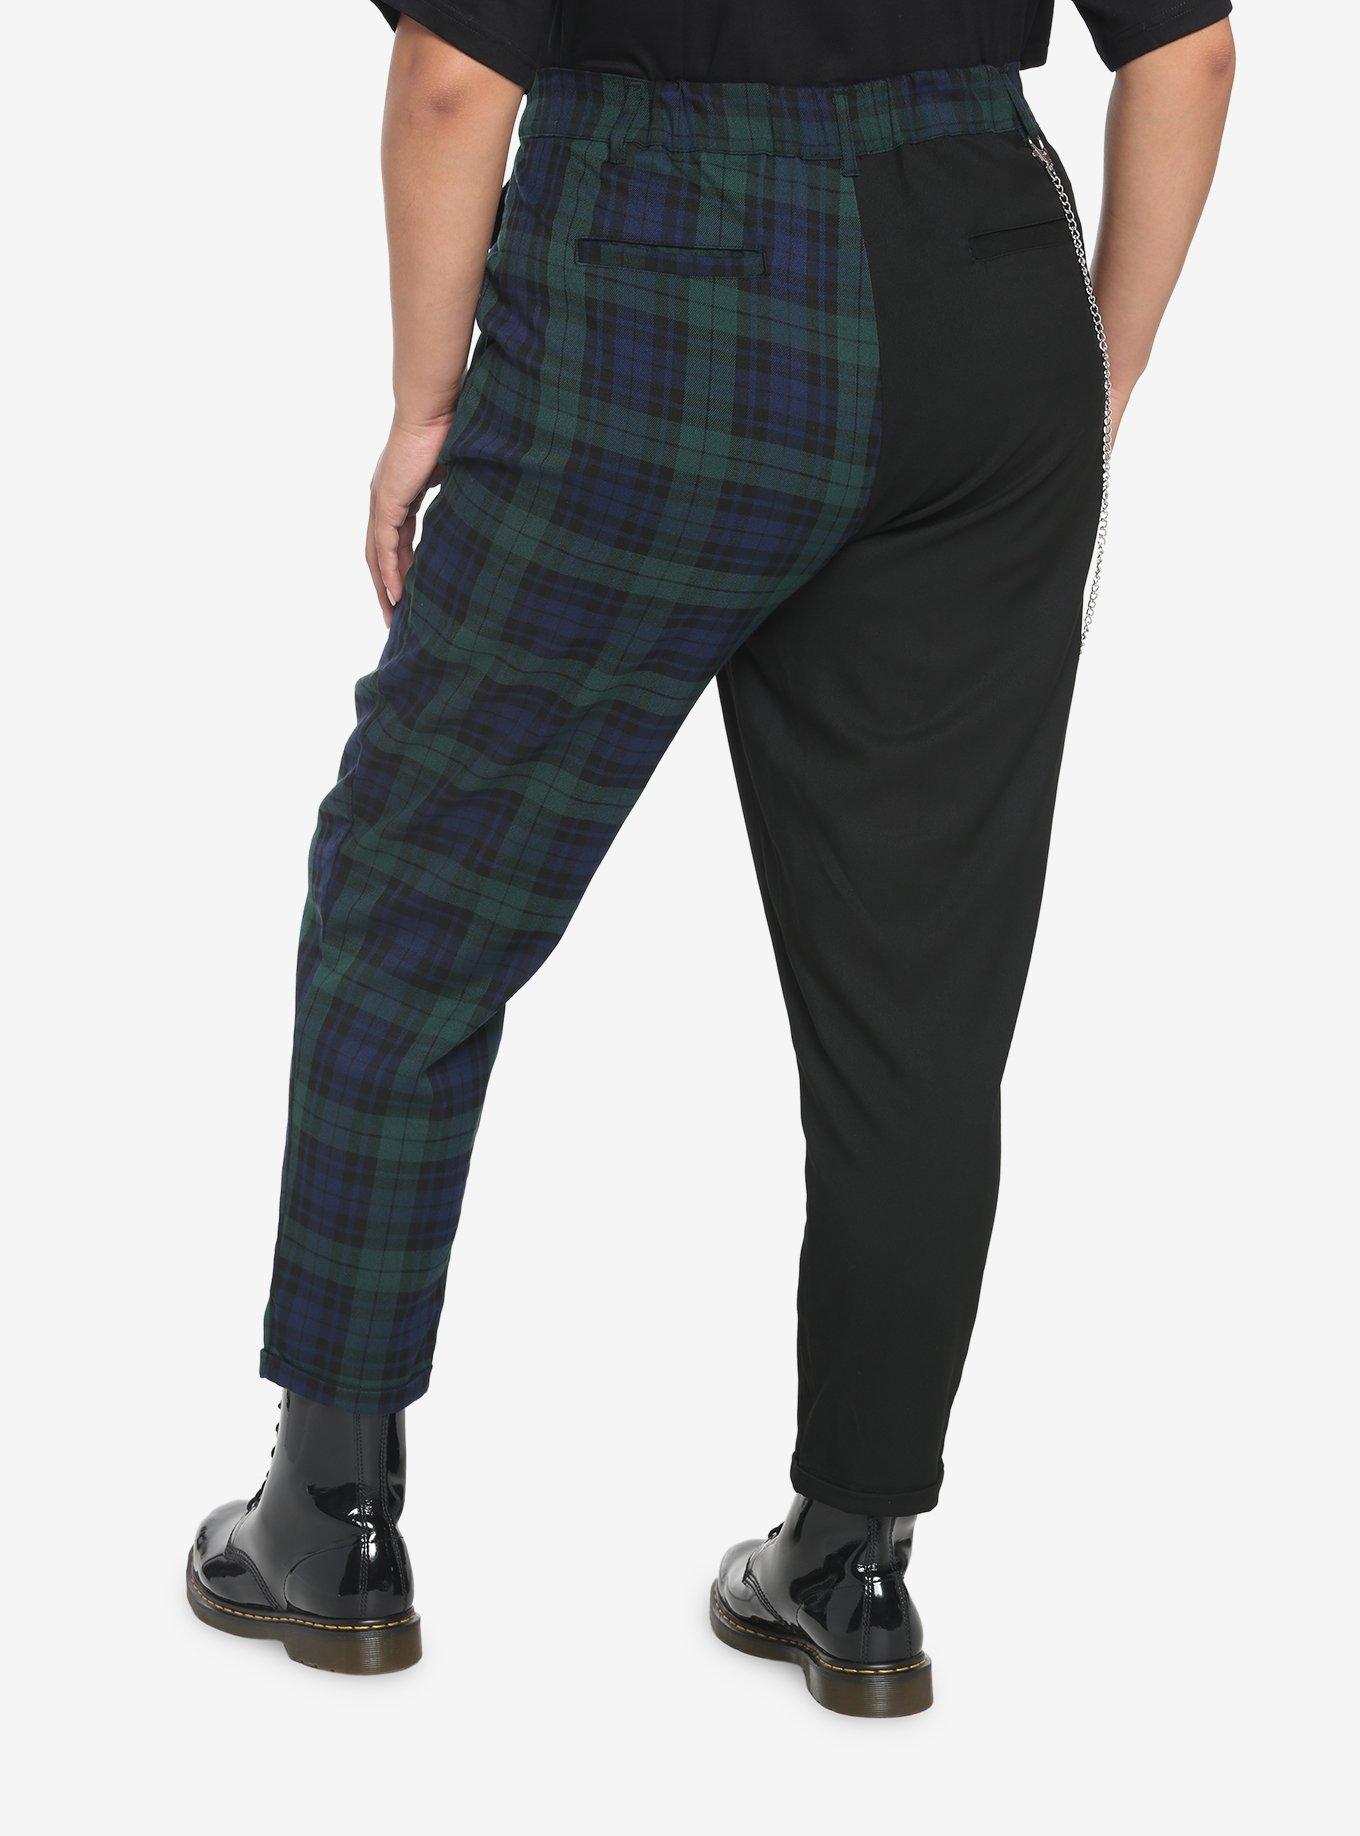 Black & Green Plaid Split Pants Plus Size, BLACK  GREEN, alternate